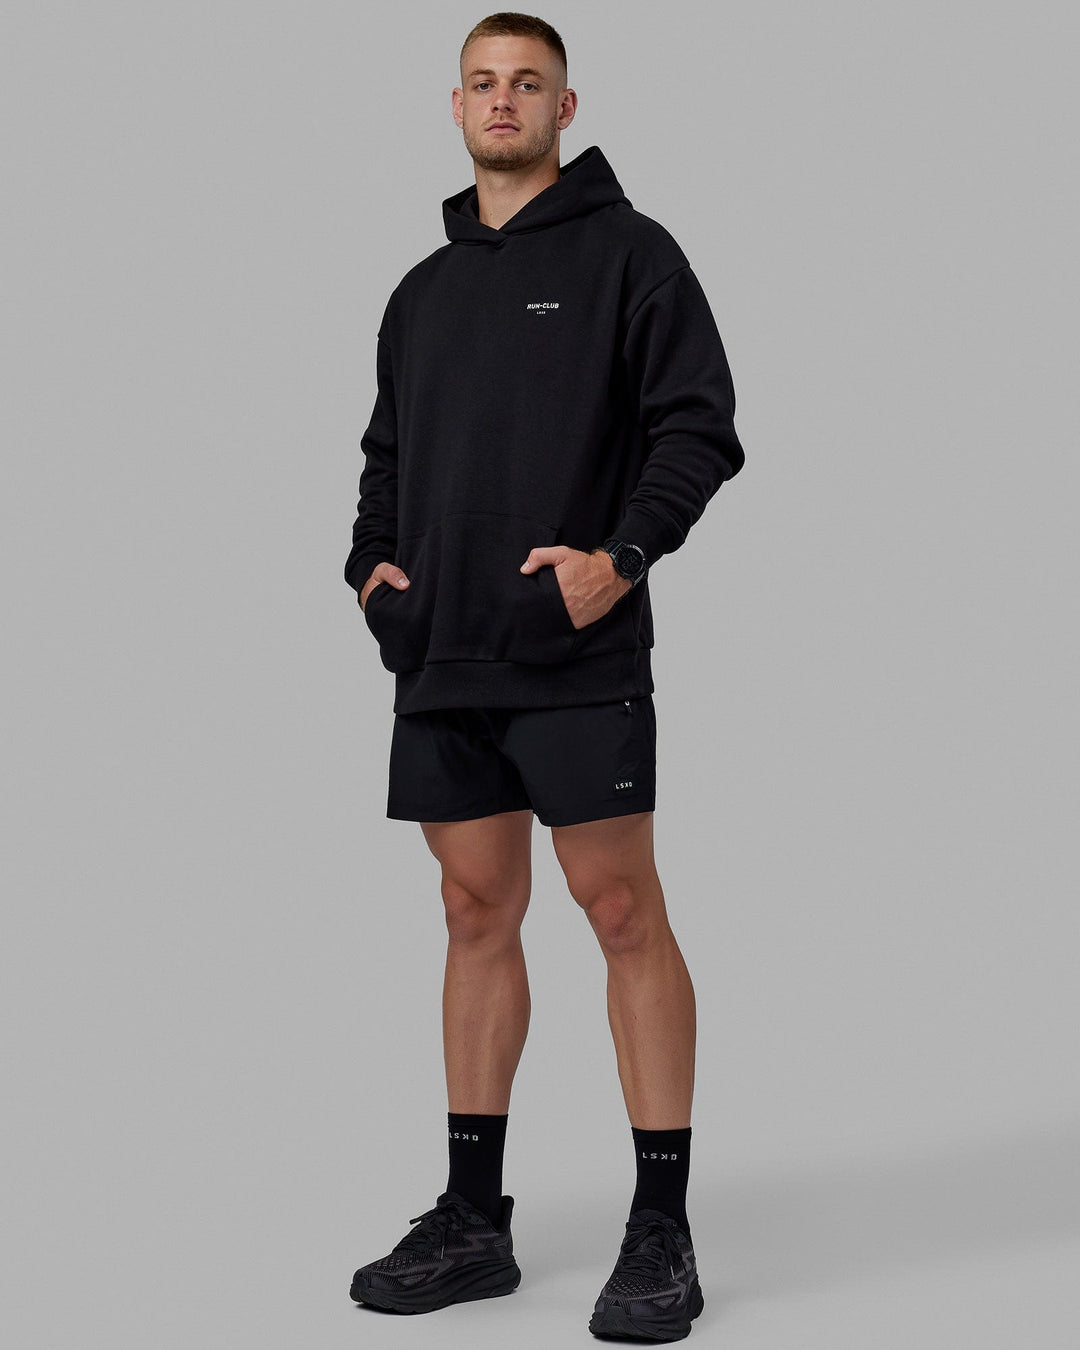 Man wearing Unisex RUN-CLUB Hoodie Oversize - Black